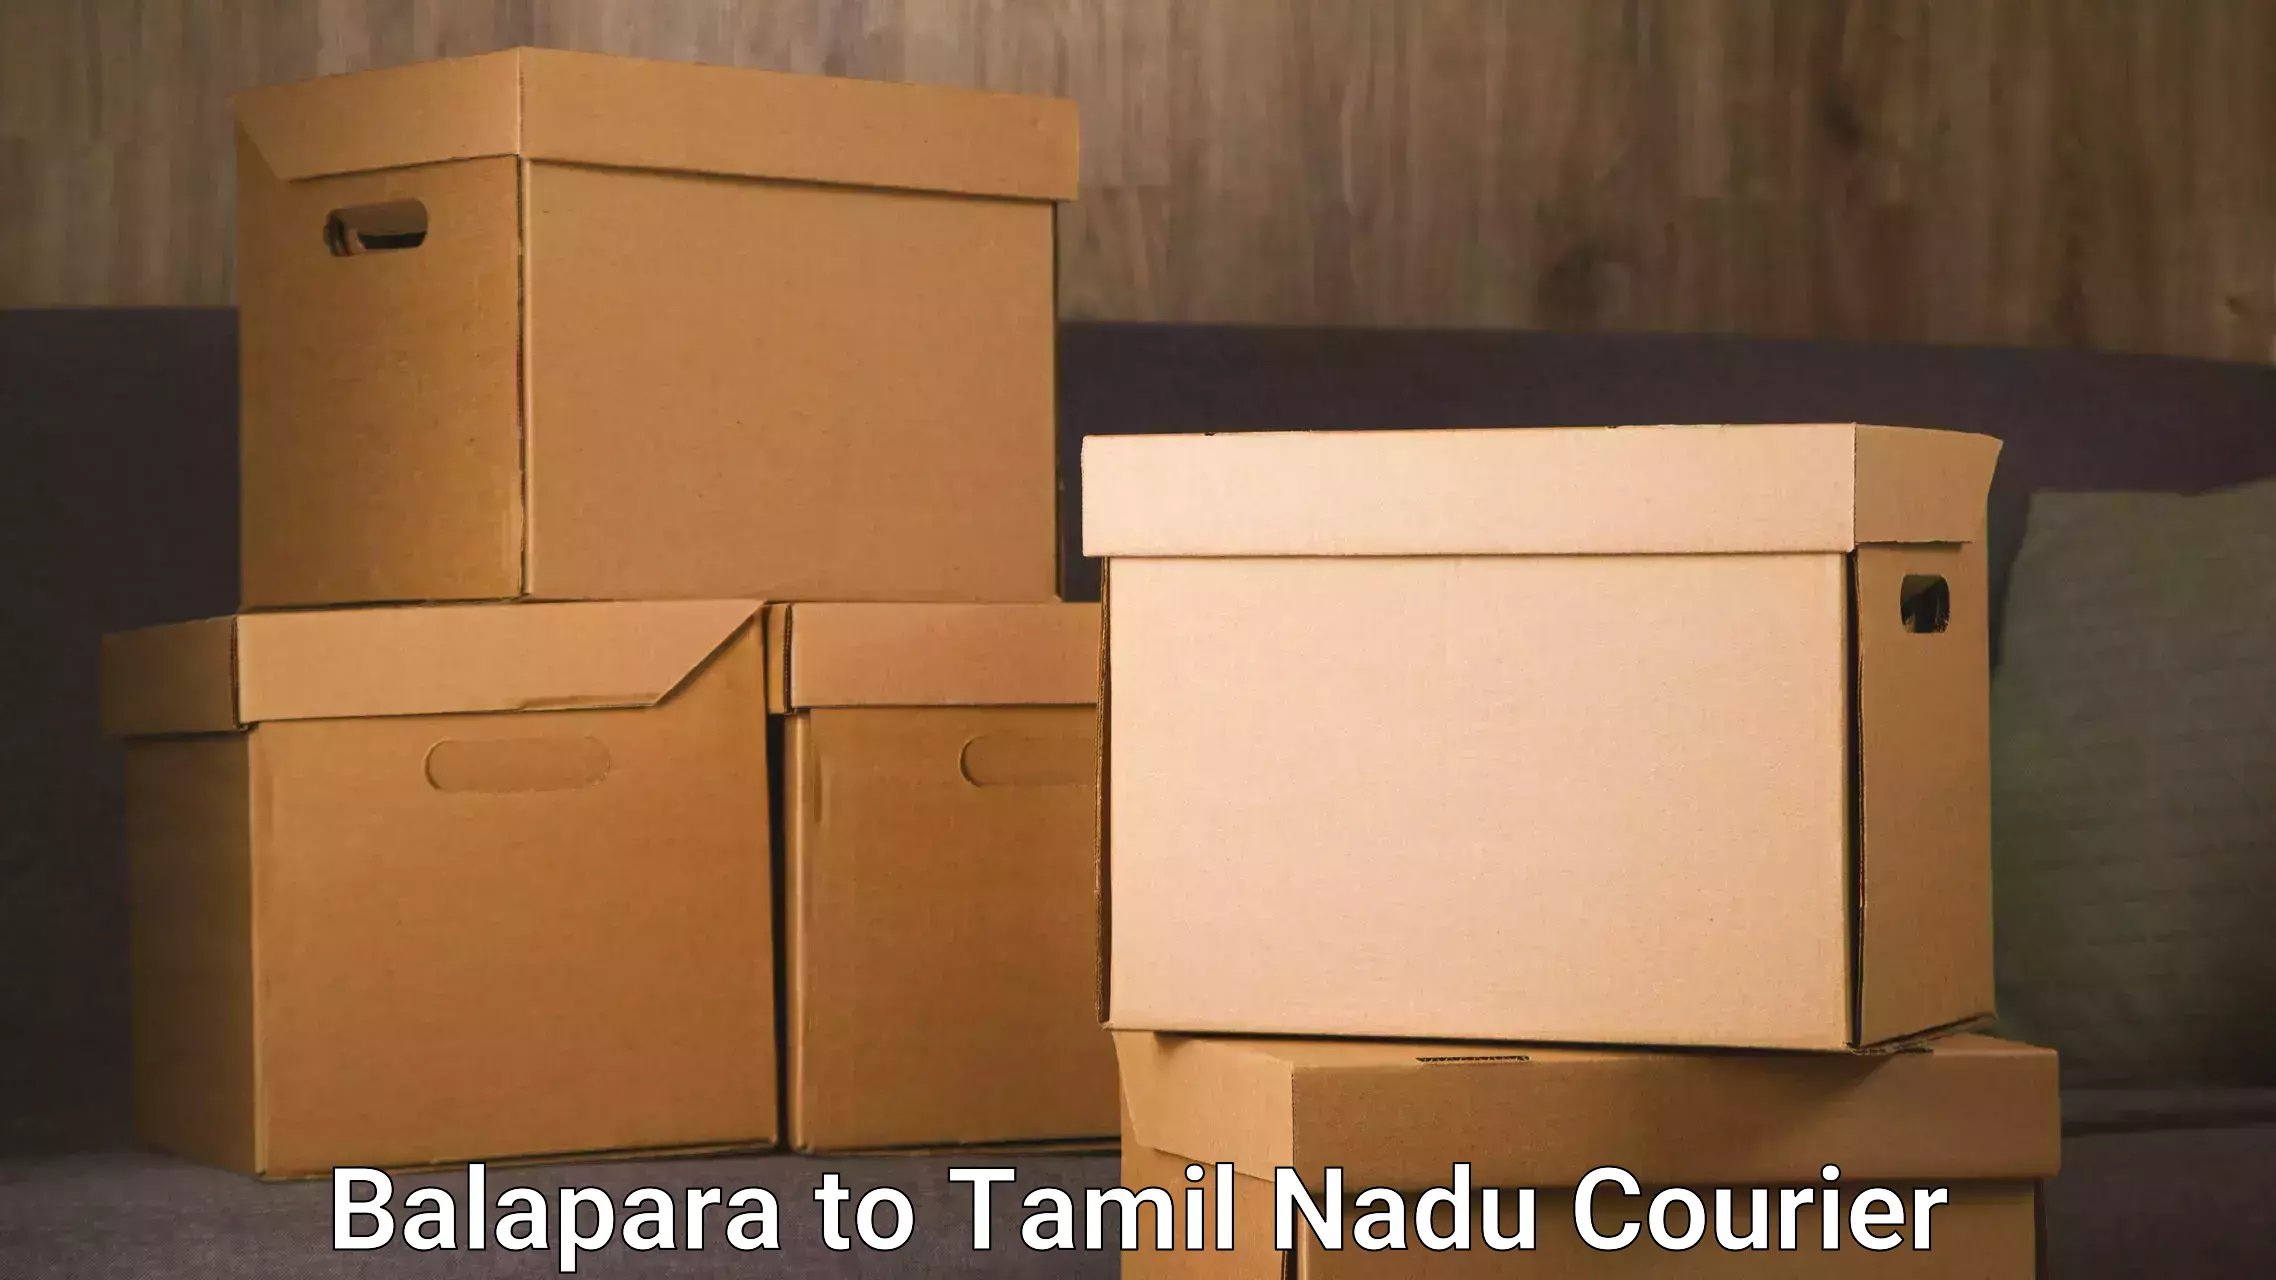 Logistics service provider Balapara to Tamil Nadu